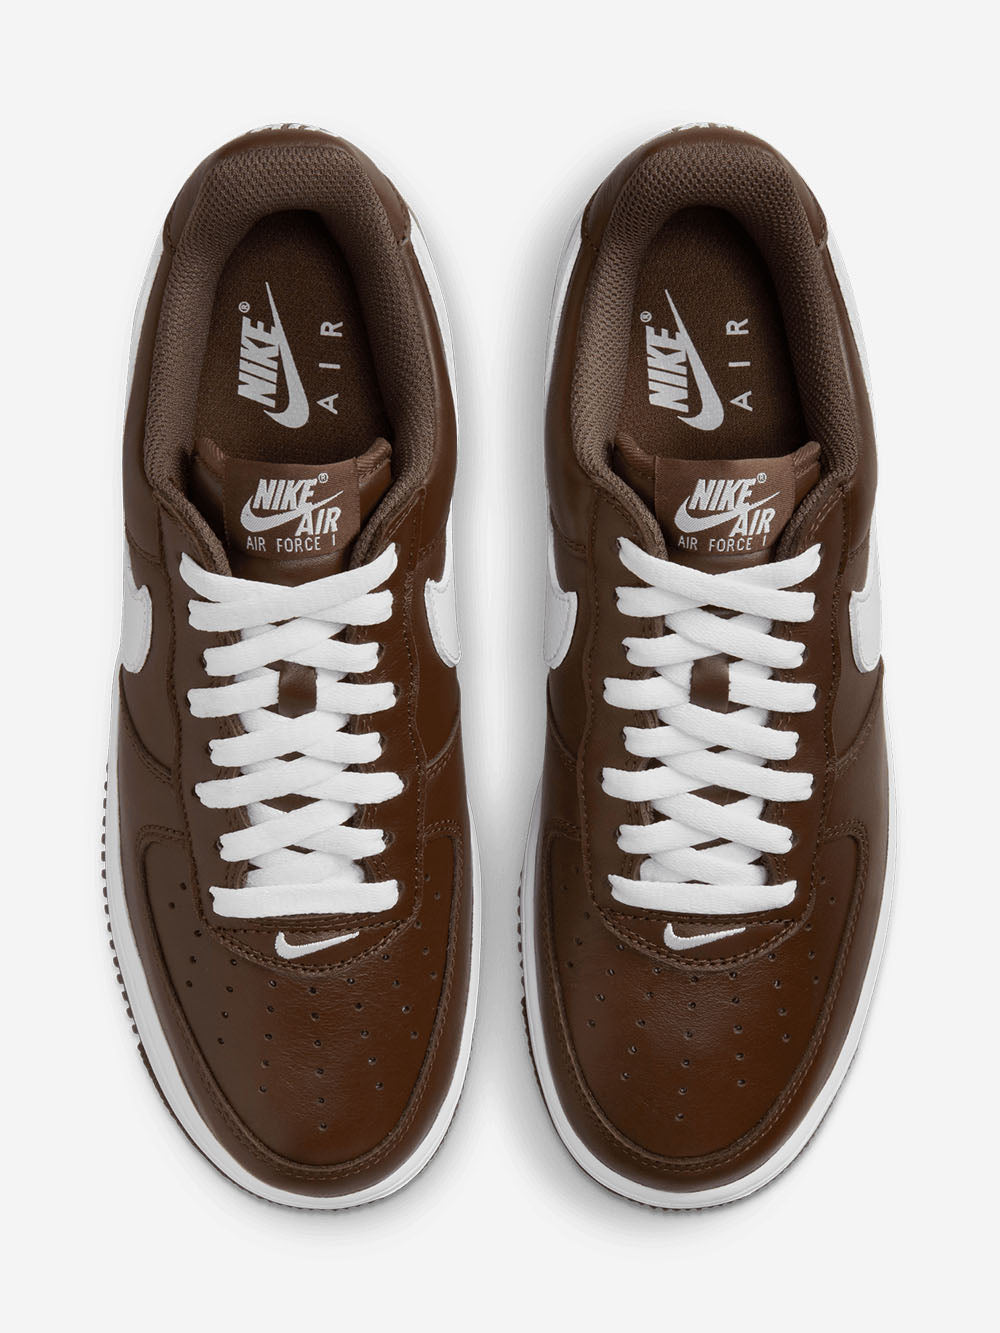 NIKE Air Force 1 Low Retro "Chocolate" Sneakers Marrone Urbanstaroma